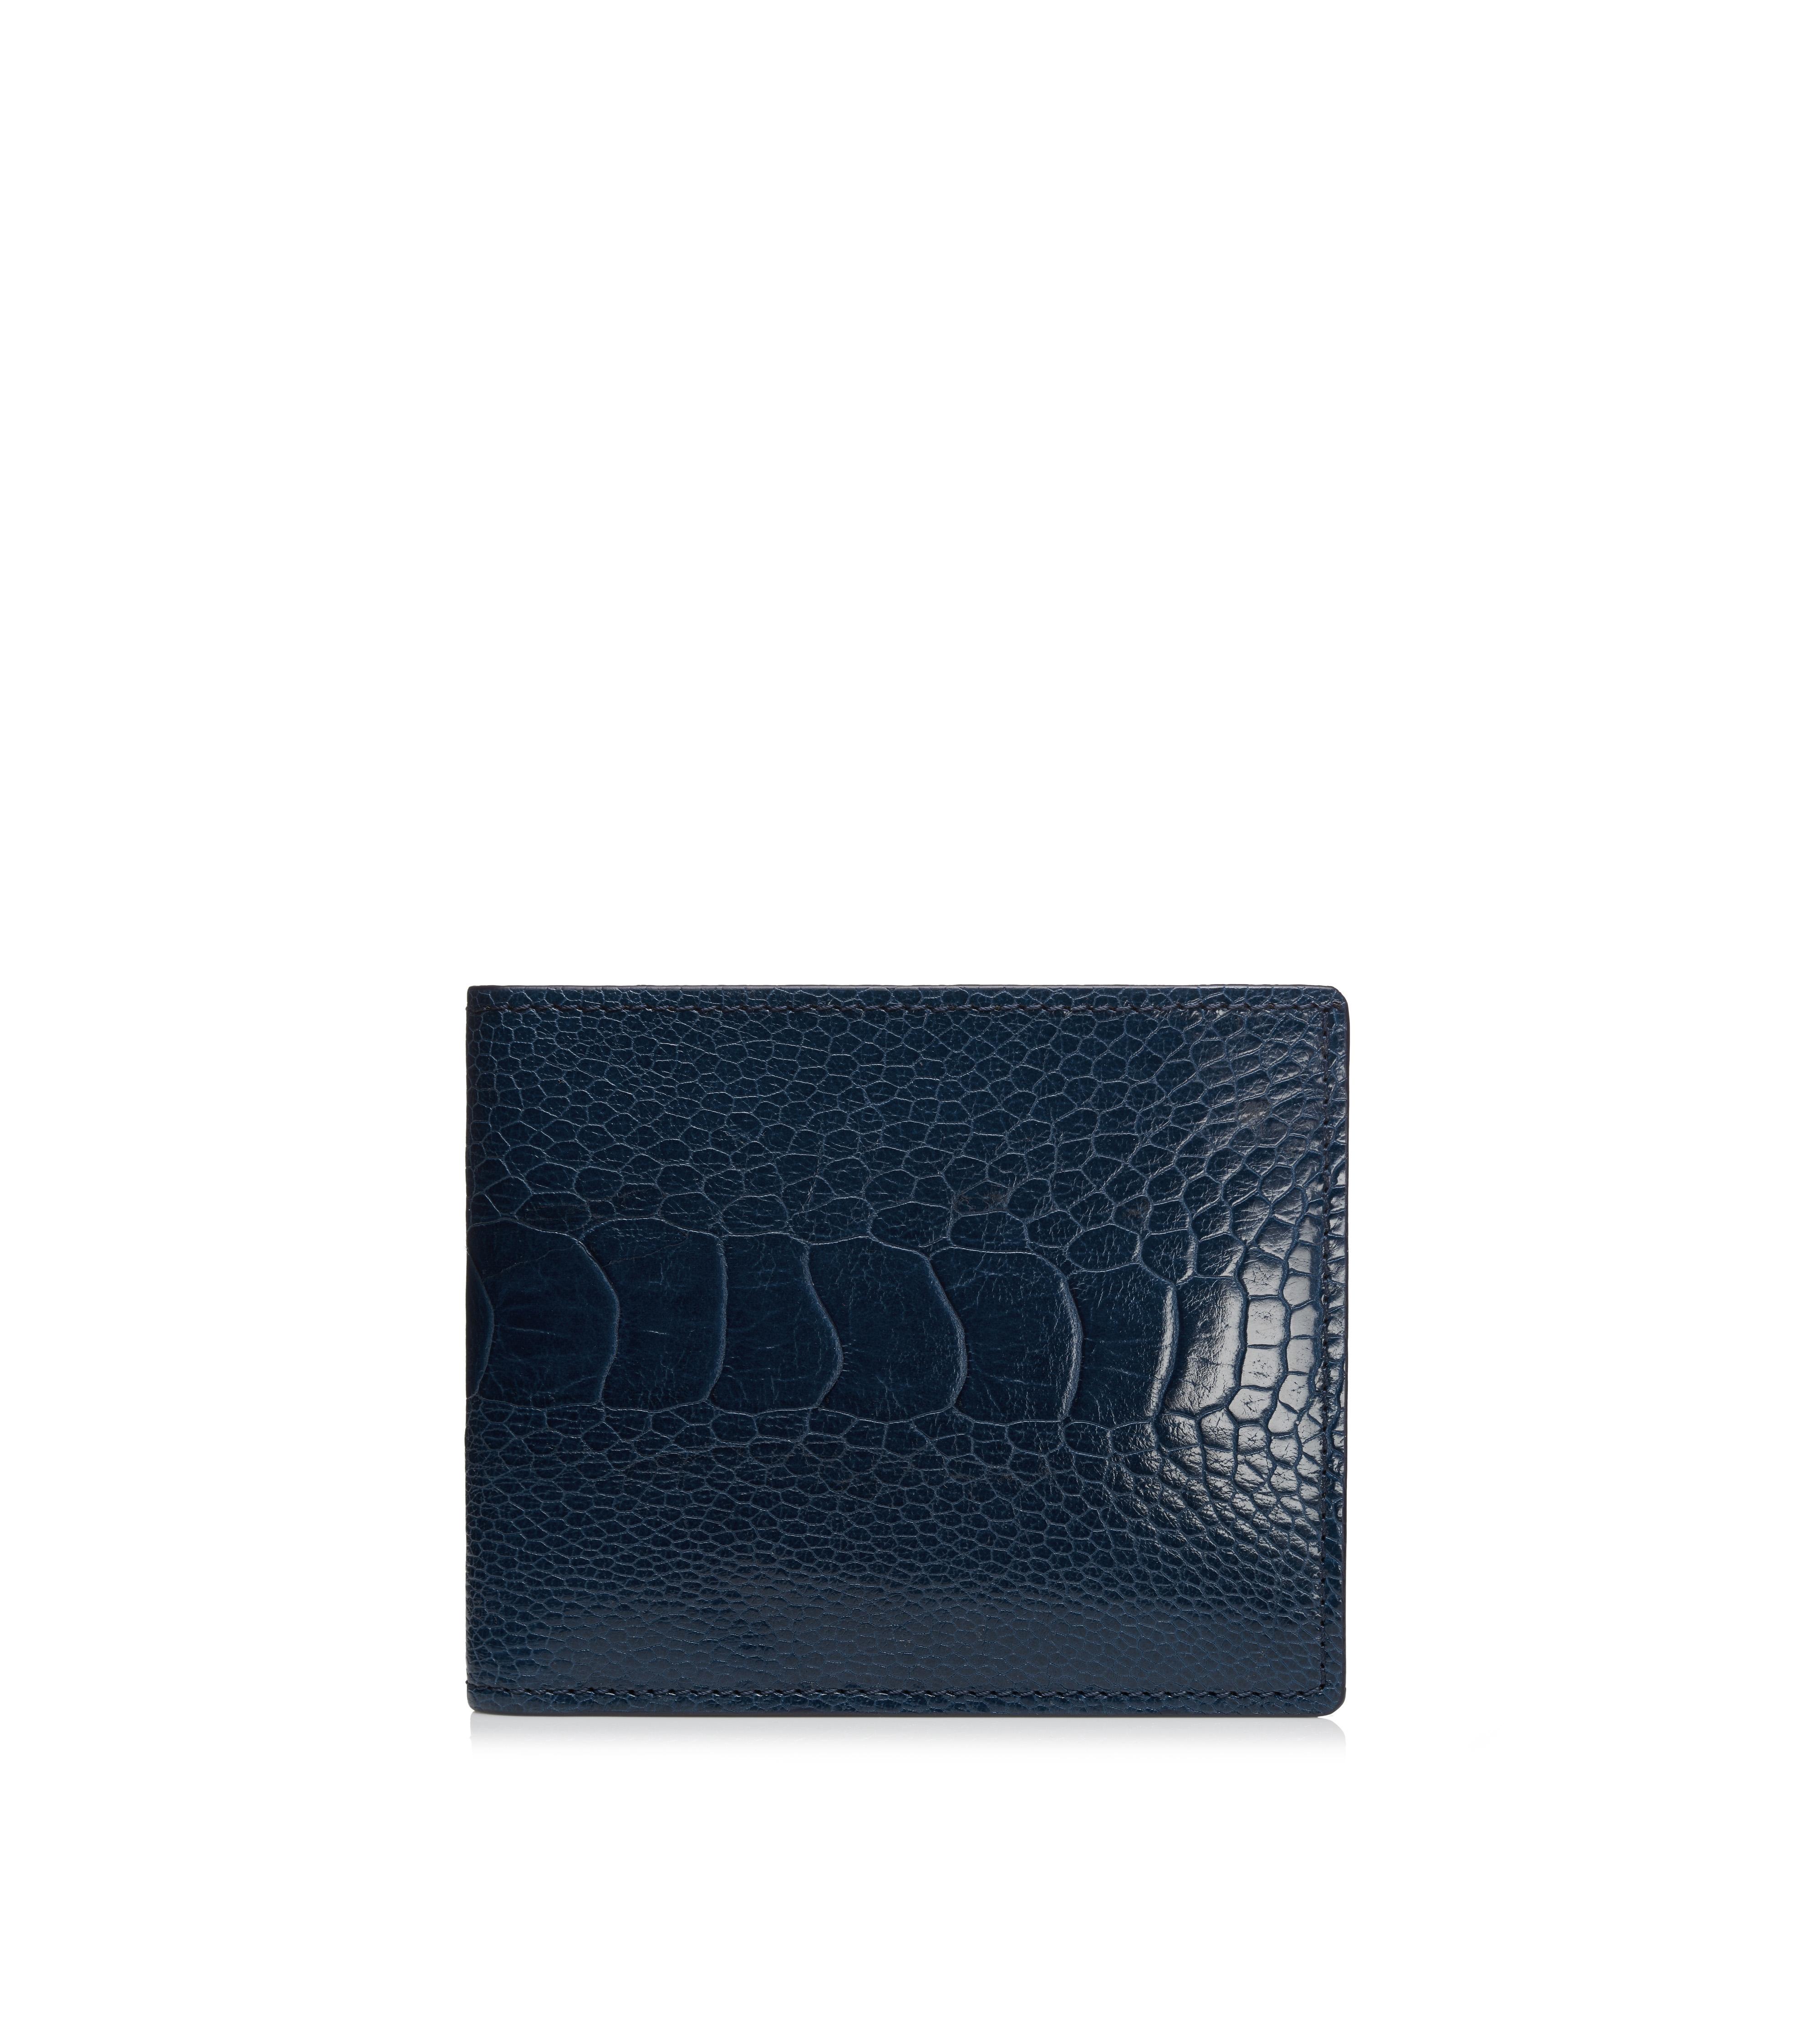 Small Leather Goods - Wallets for Men by TOM FORD - Designer Men's ...